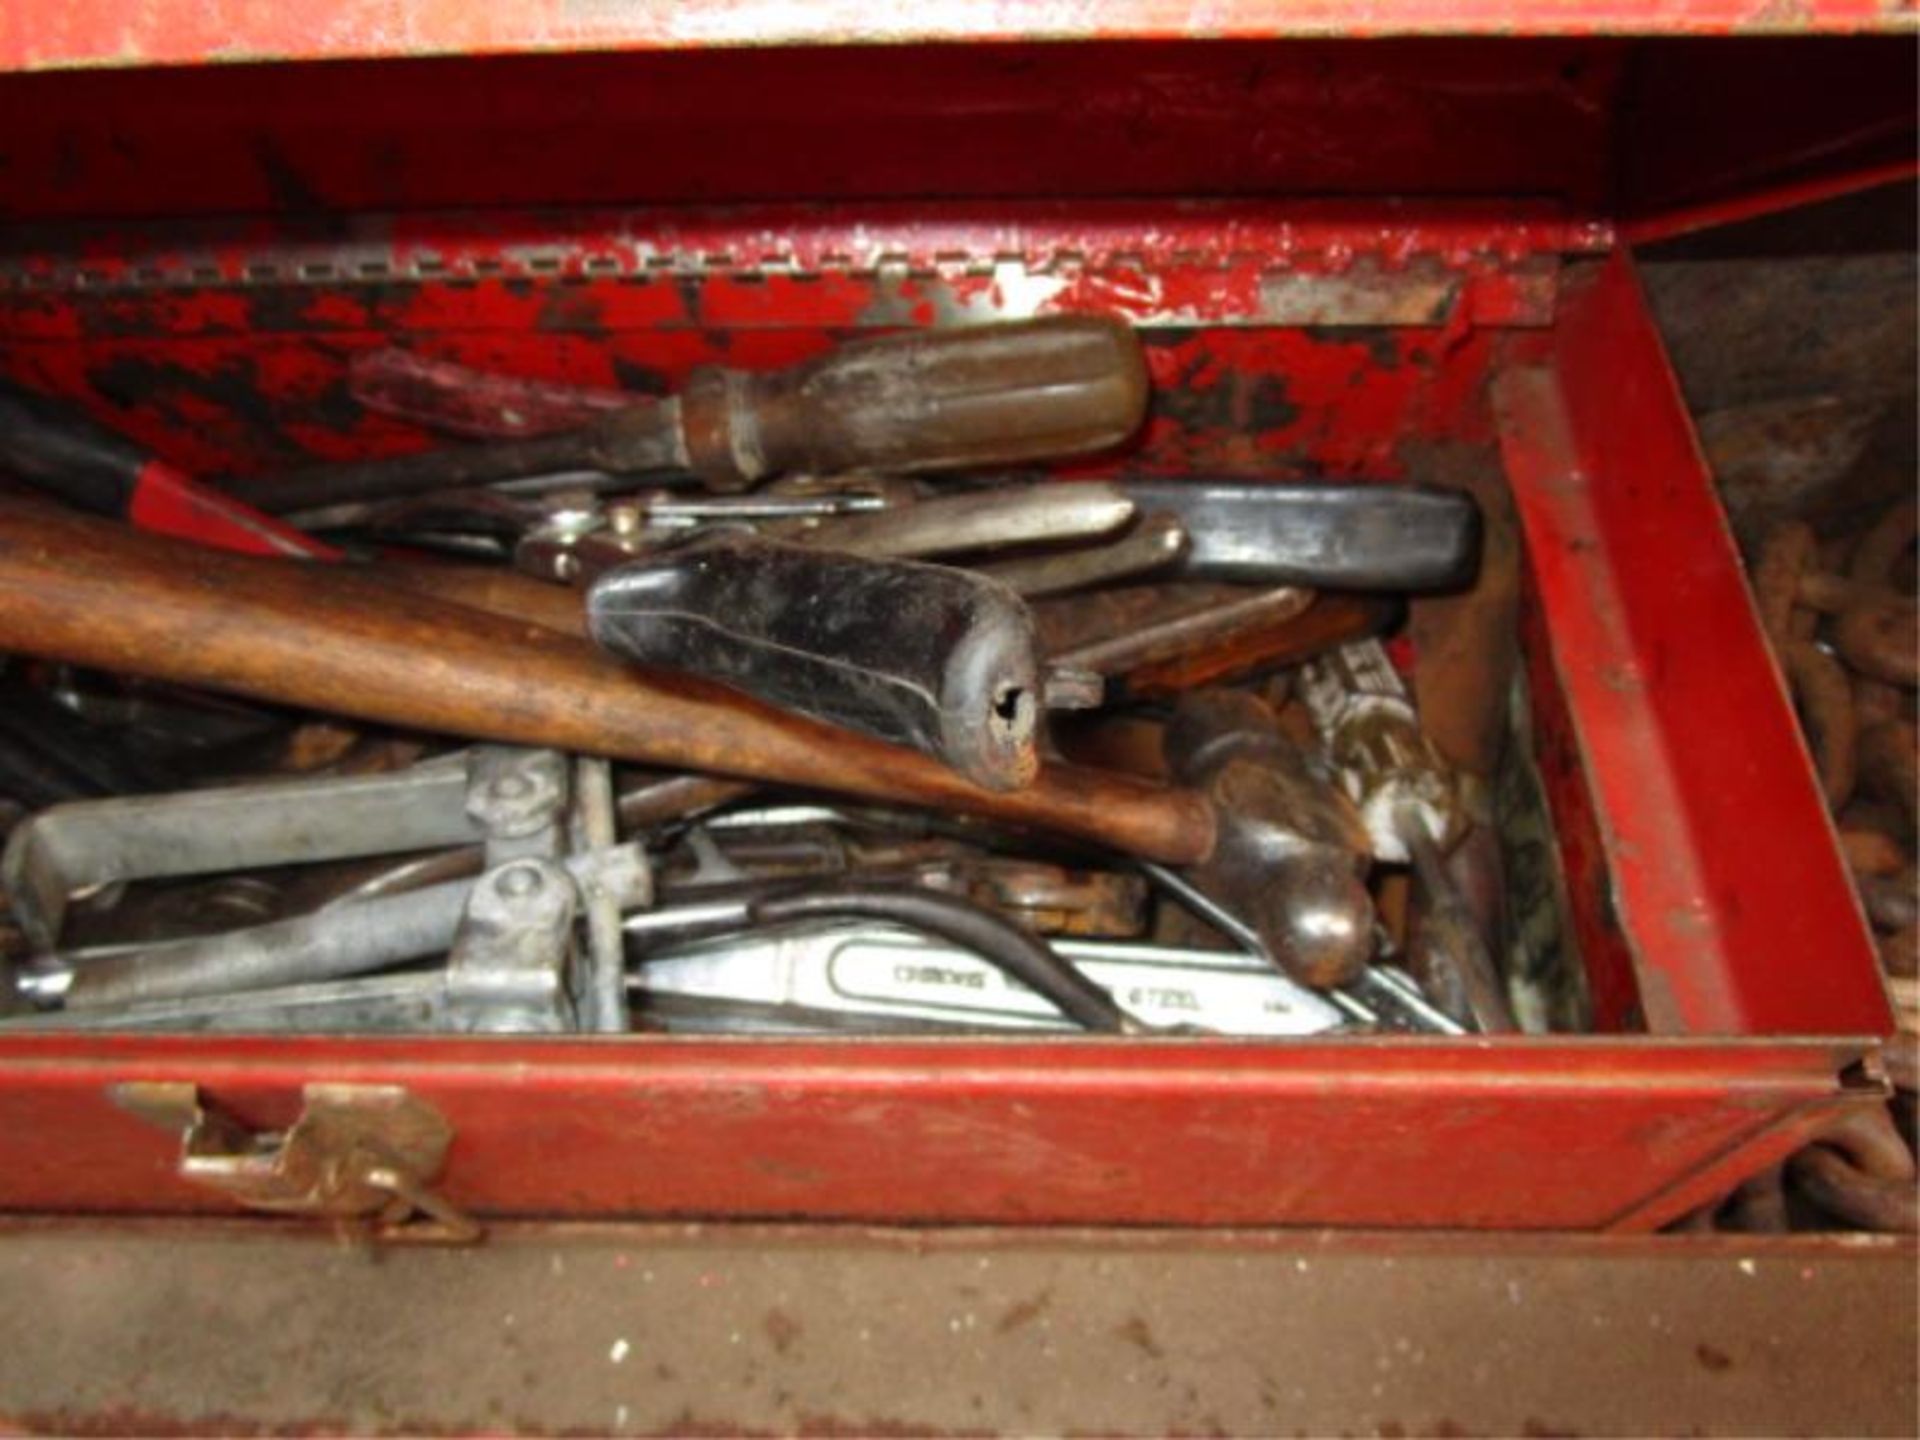 Bottom Shelf Lot - Small Tool Box w/ Tools, Pump Jack, 4 Way, Chain, Hard Hats - Image 3 of 5